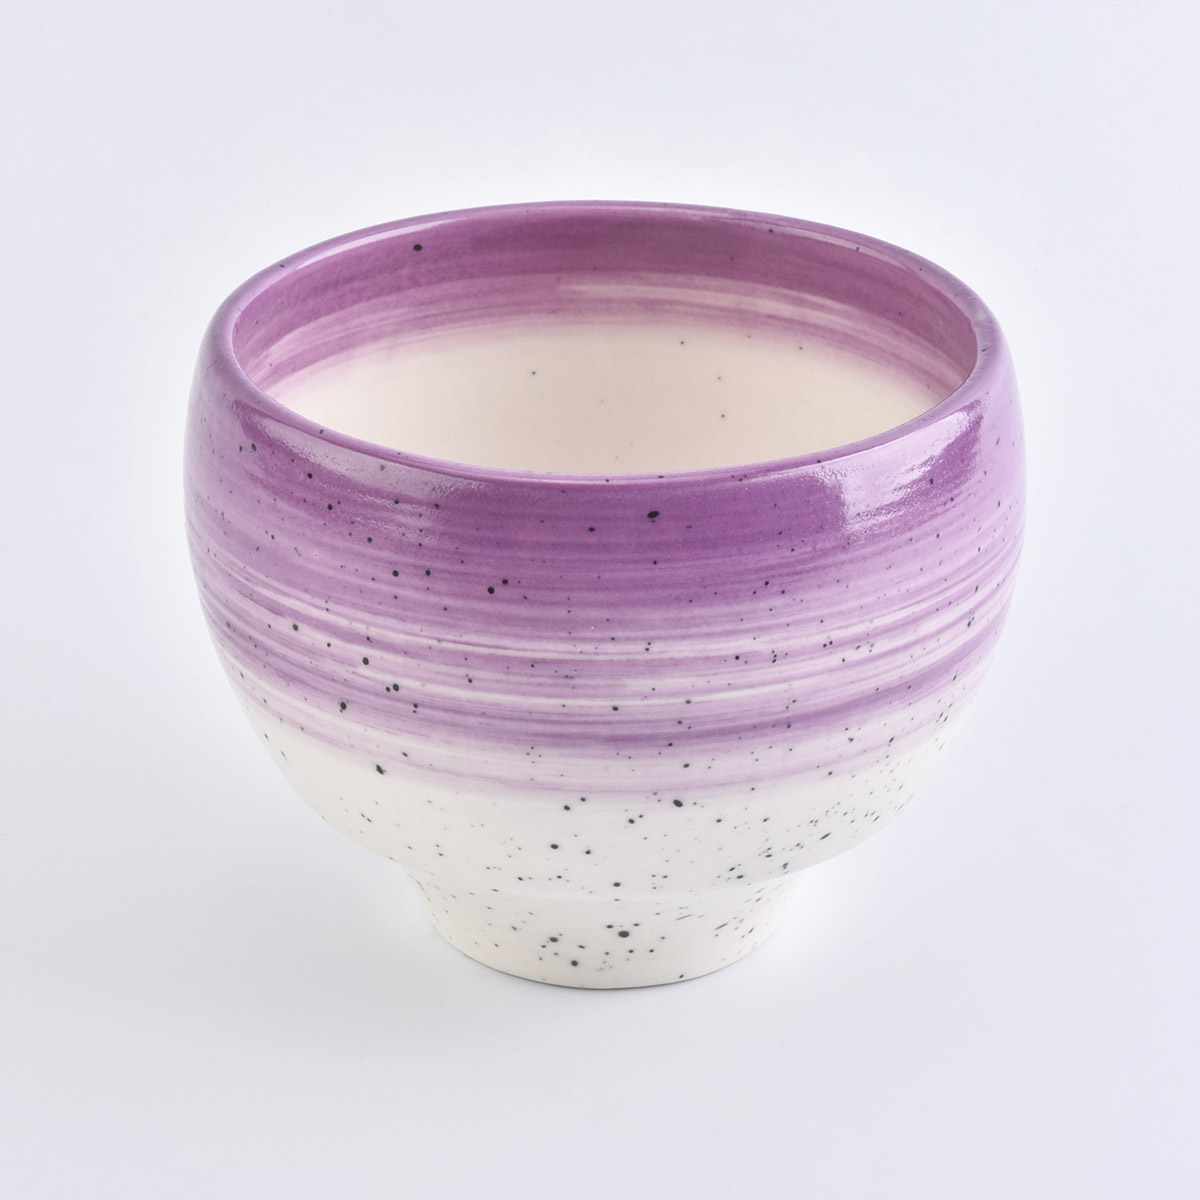 wadah lilin keramik putih dengan warna kuas merah muda 12 oz